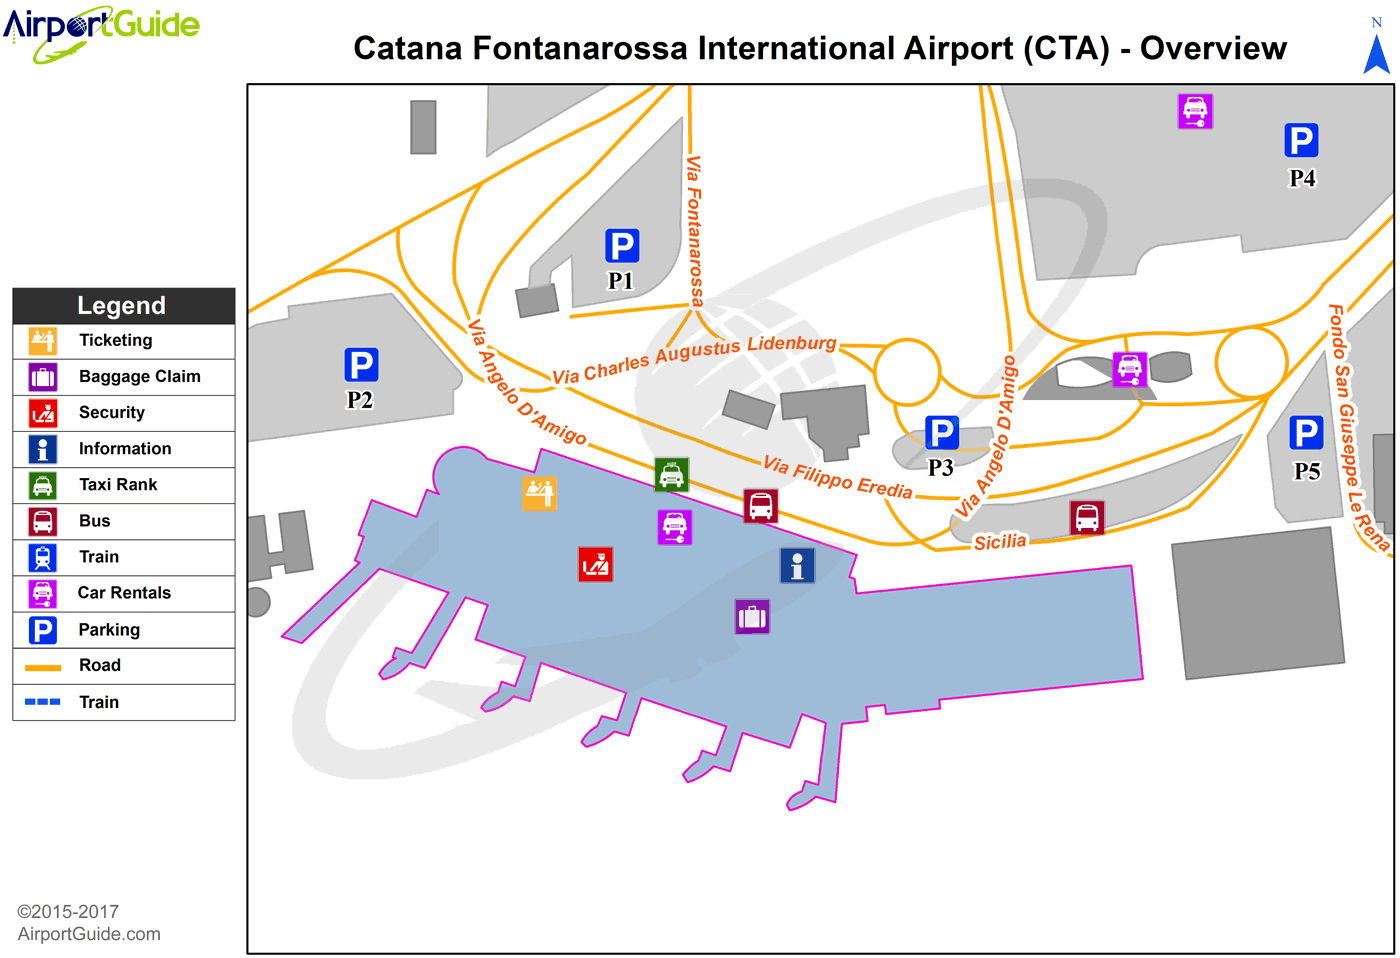 Catania - Catania-Fontanarossa Airport (CTA) Airport Terminal Map - Overview